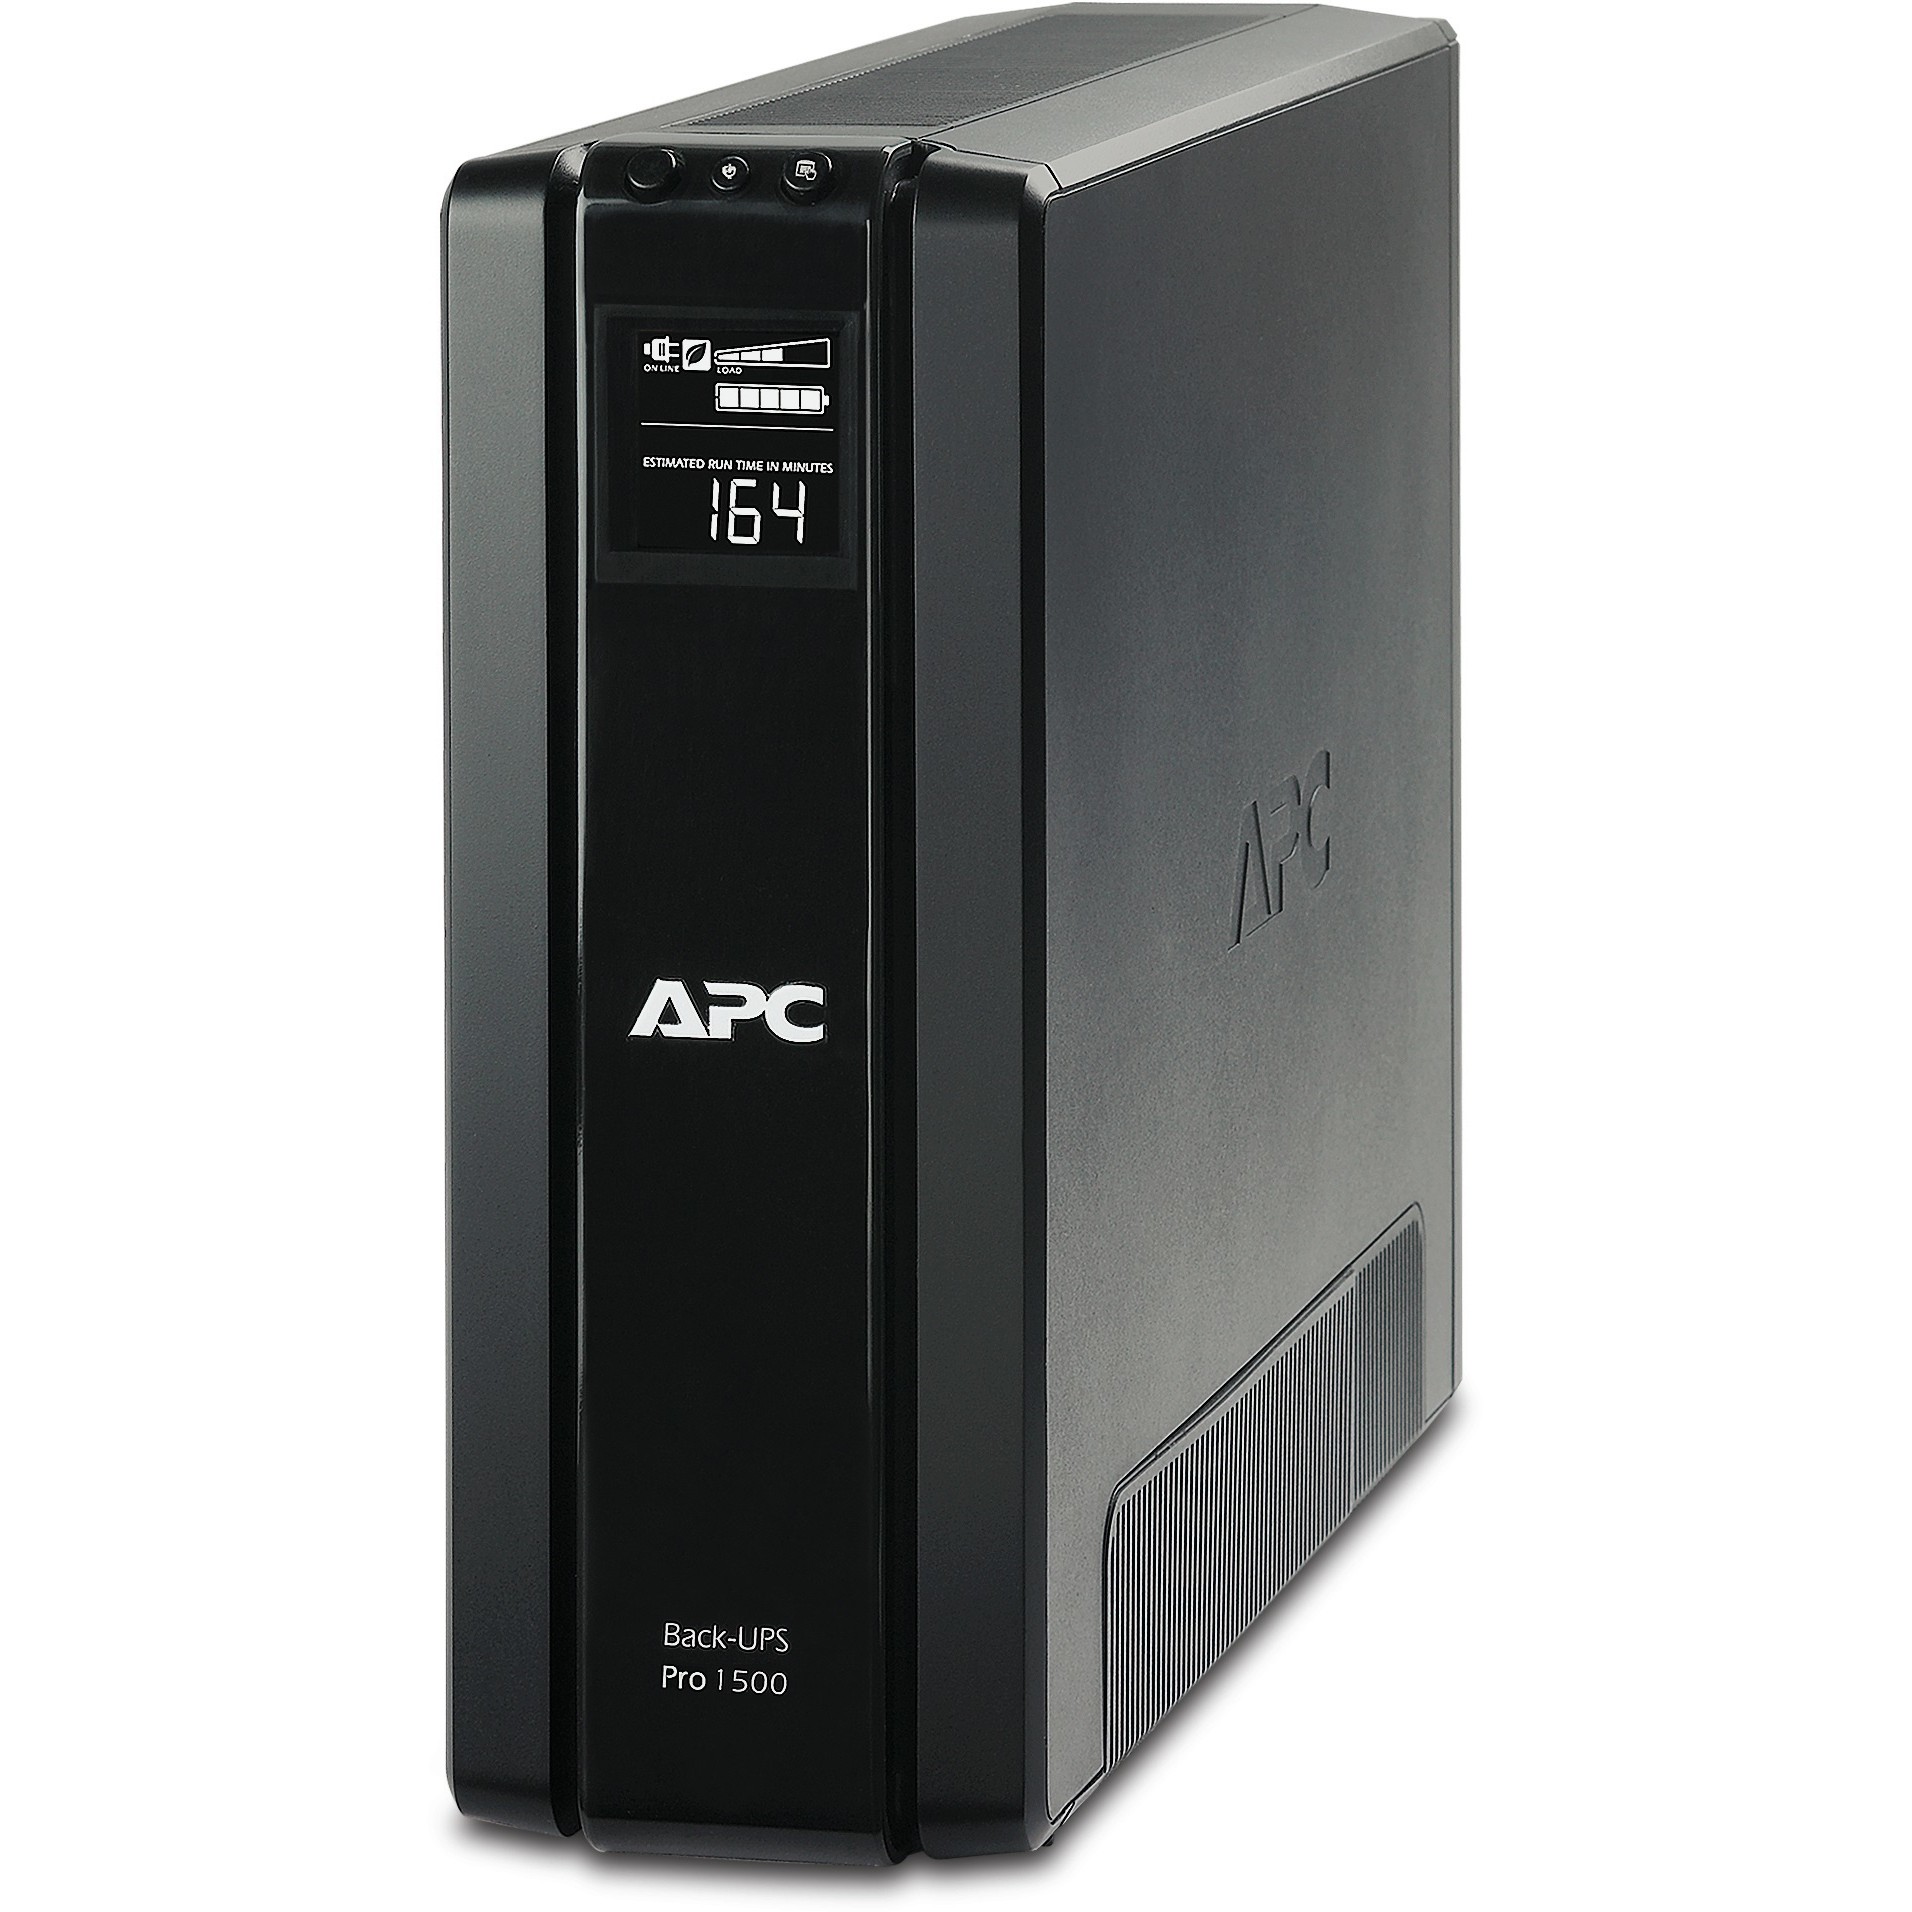 APC Back-Ups Pro 1500 VA POWER-SAVING